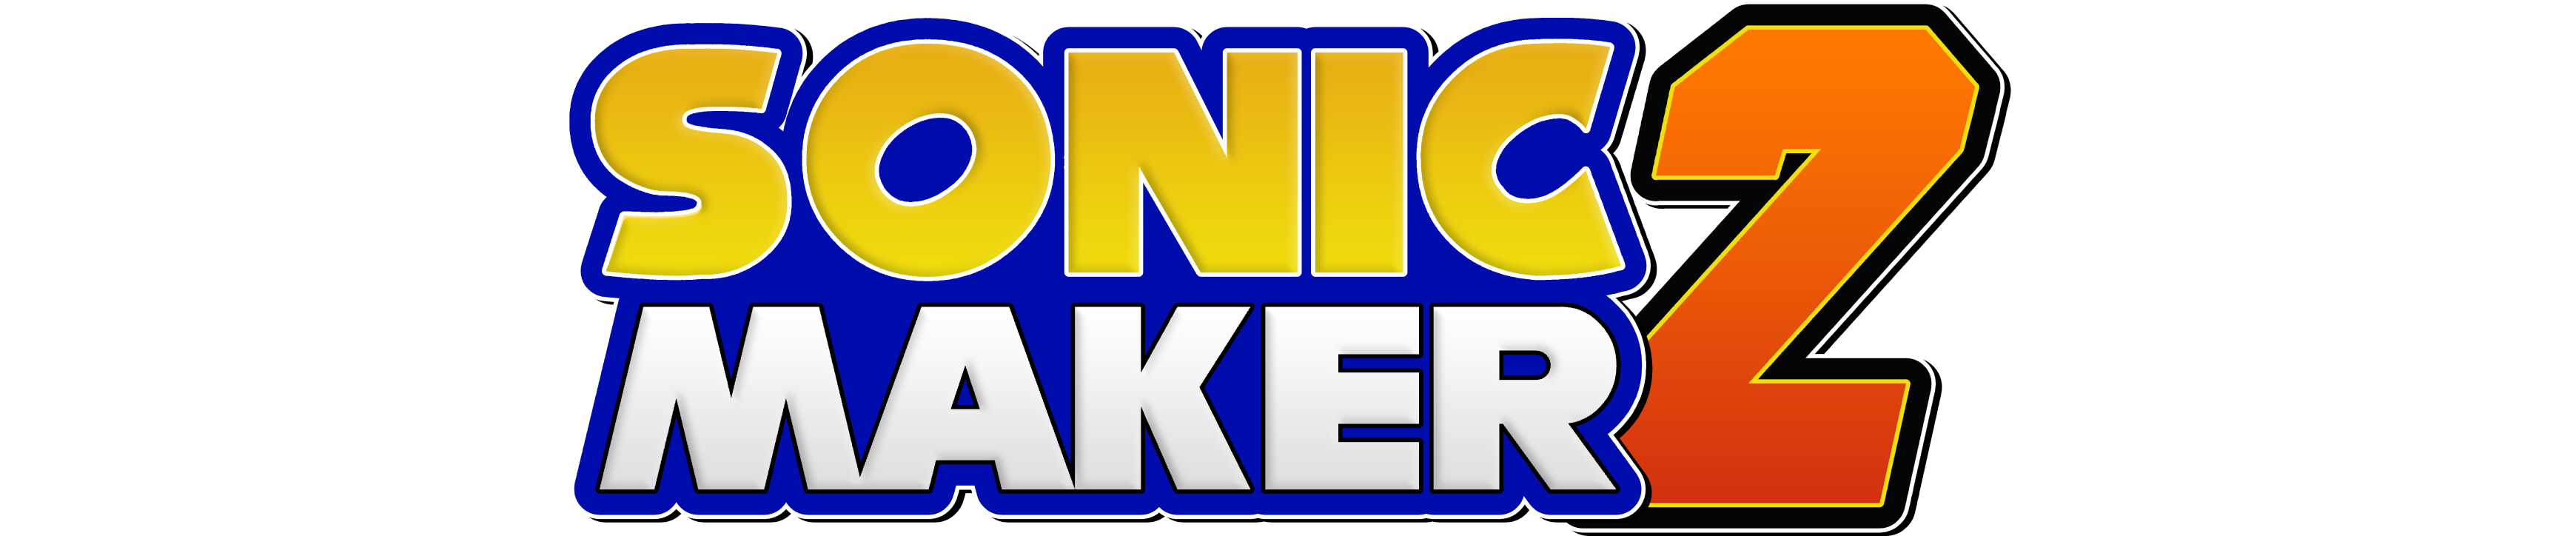 Sonic Maker 2 [Winter 2021 Demo]